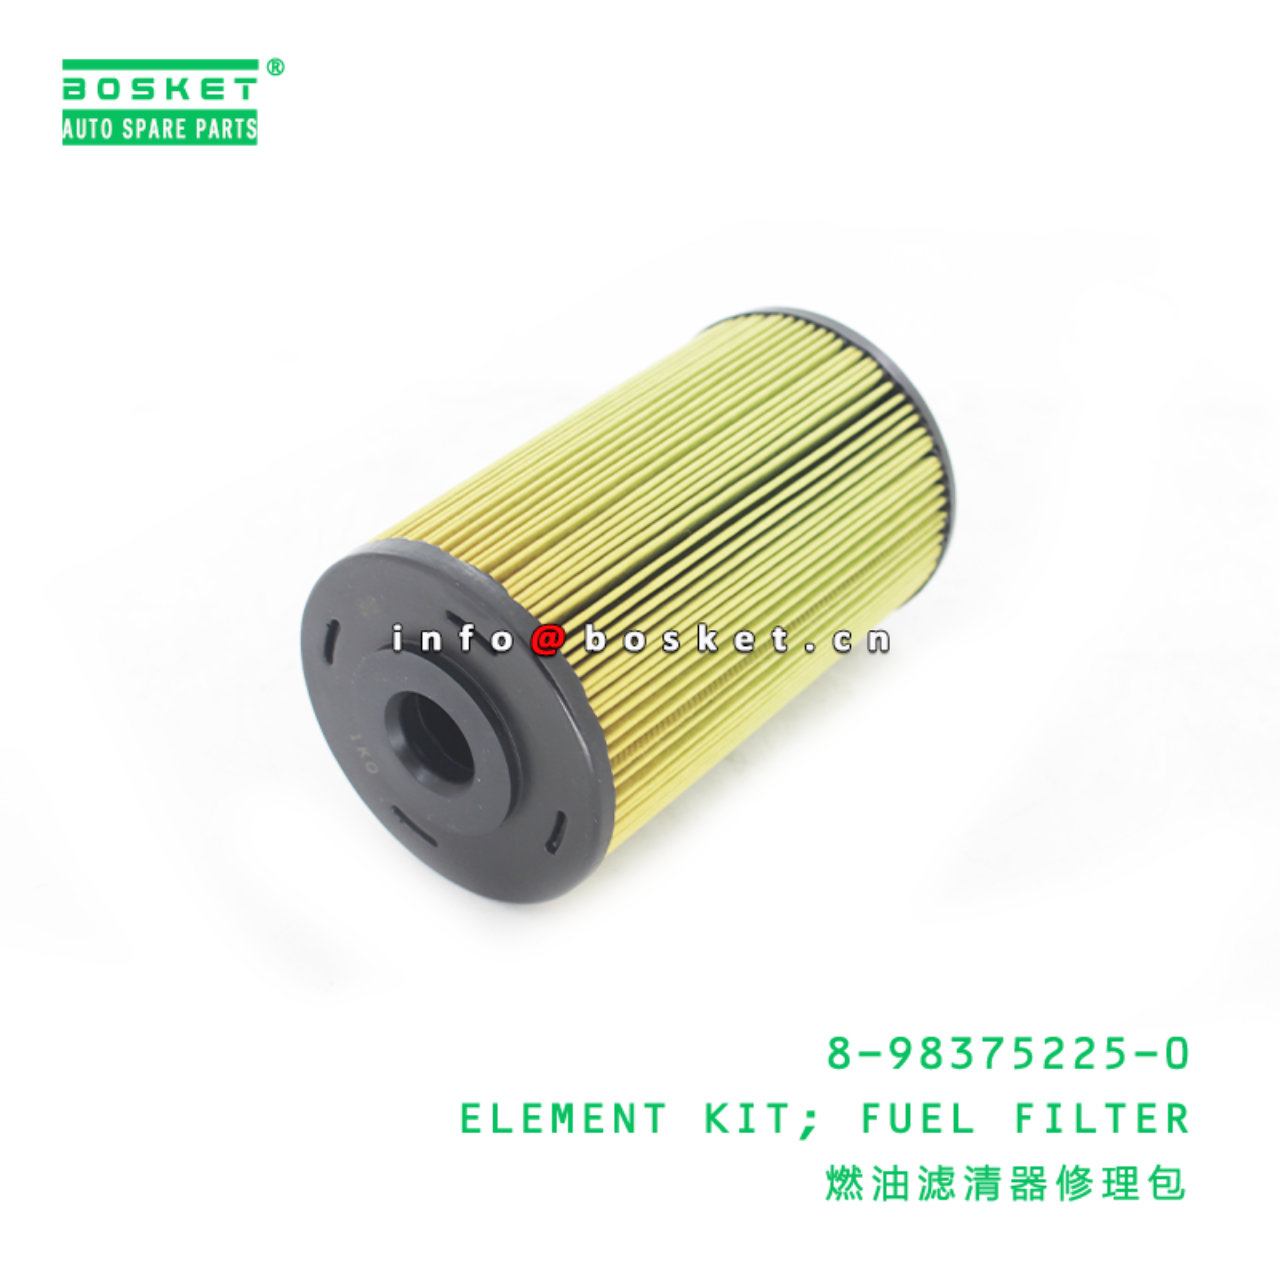 8-98375225-0 Fuel Filter Element Kit Suitable for ISUZU FTR 8983752250